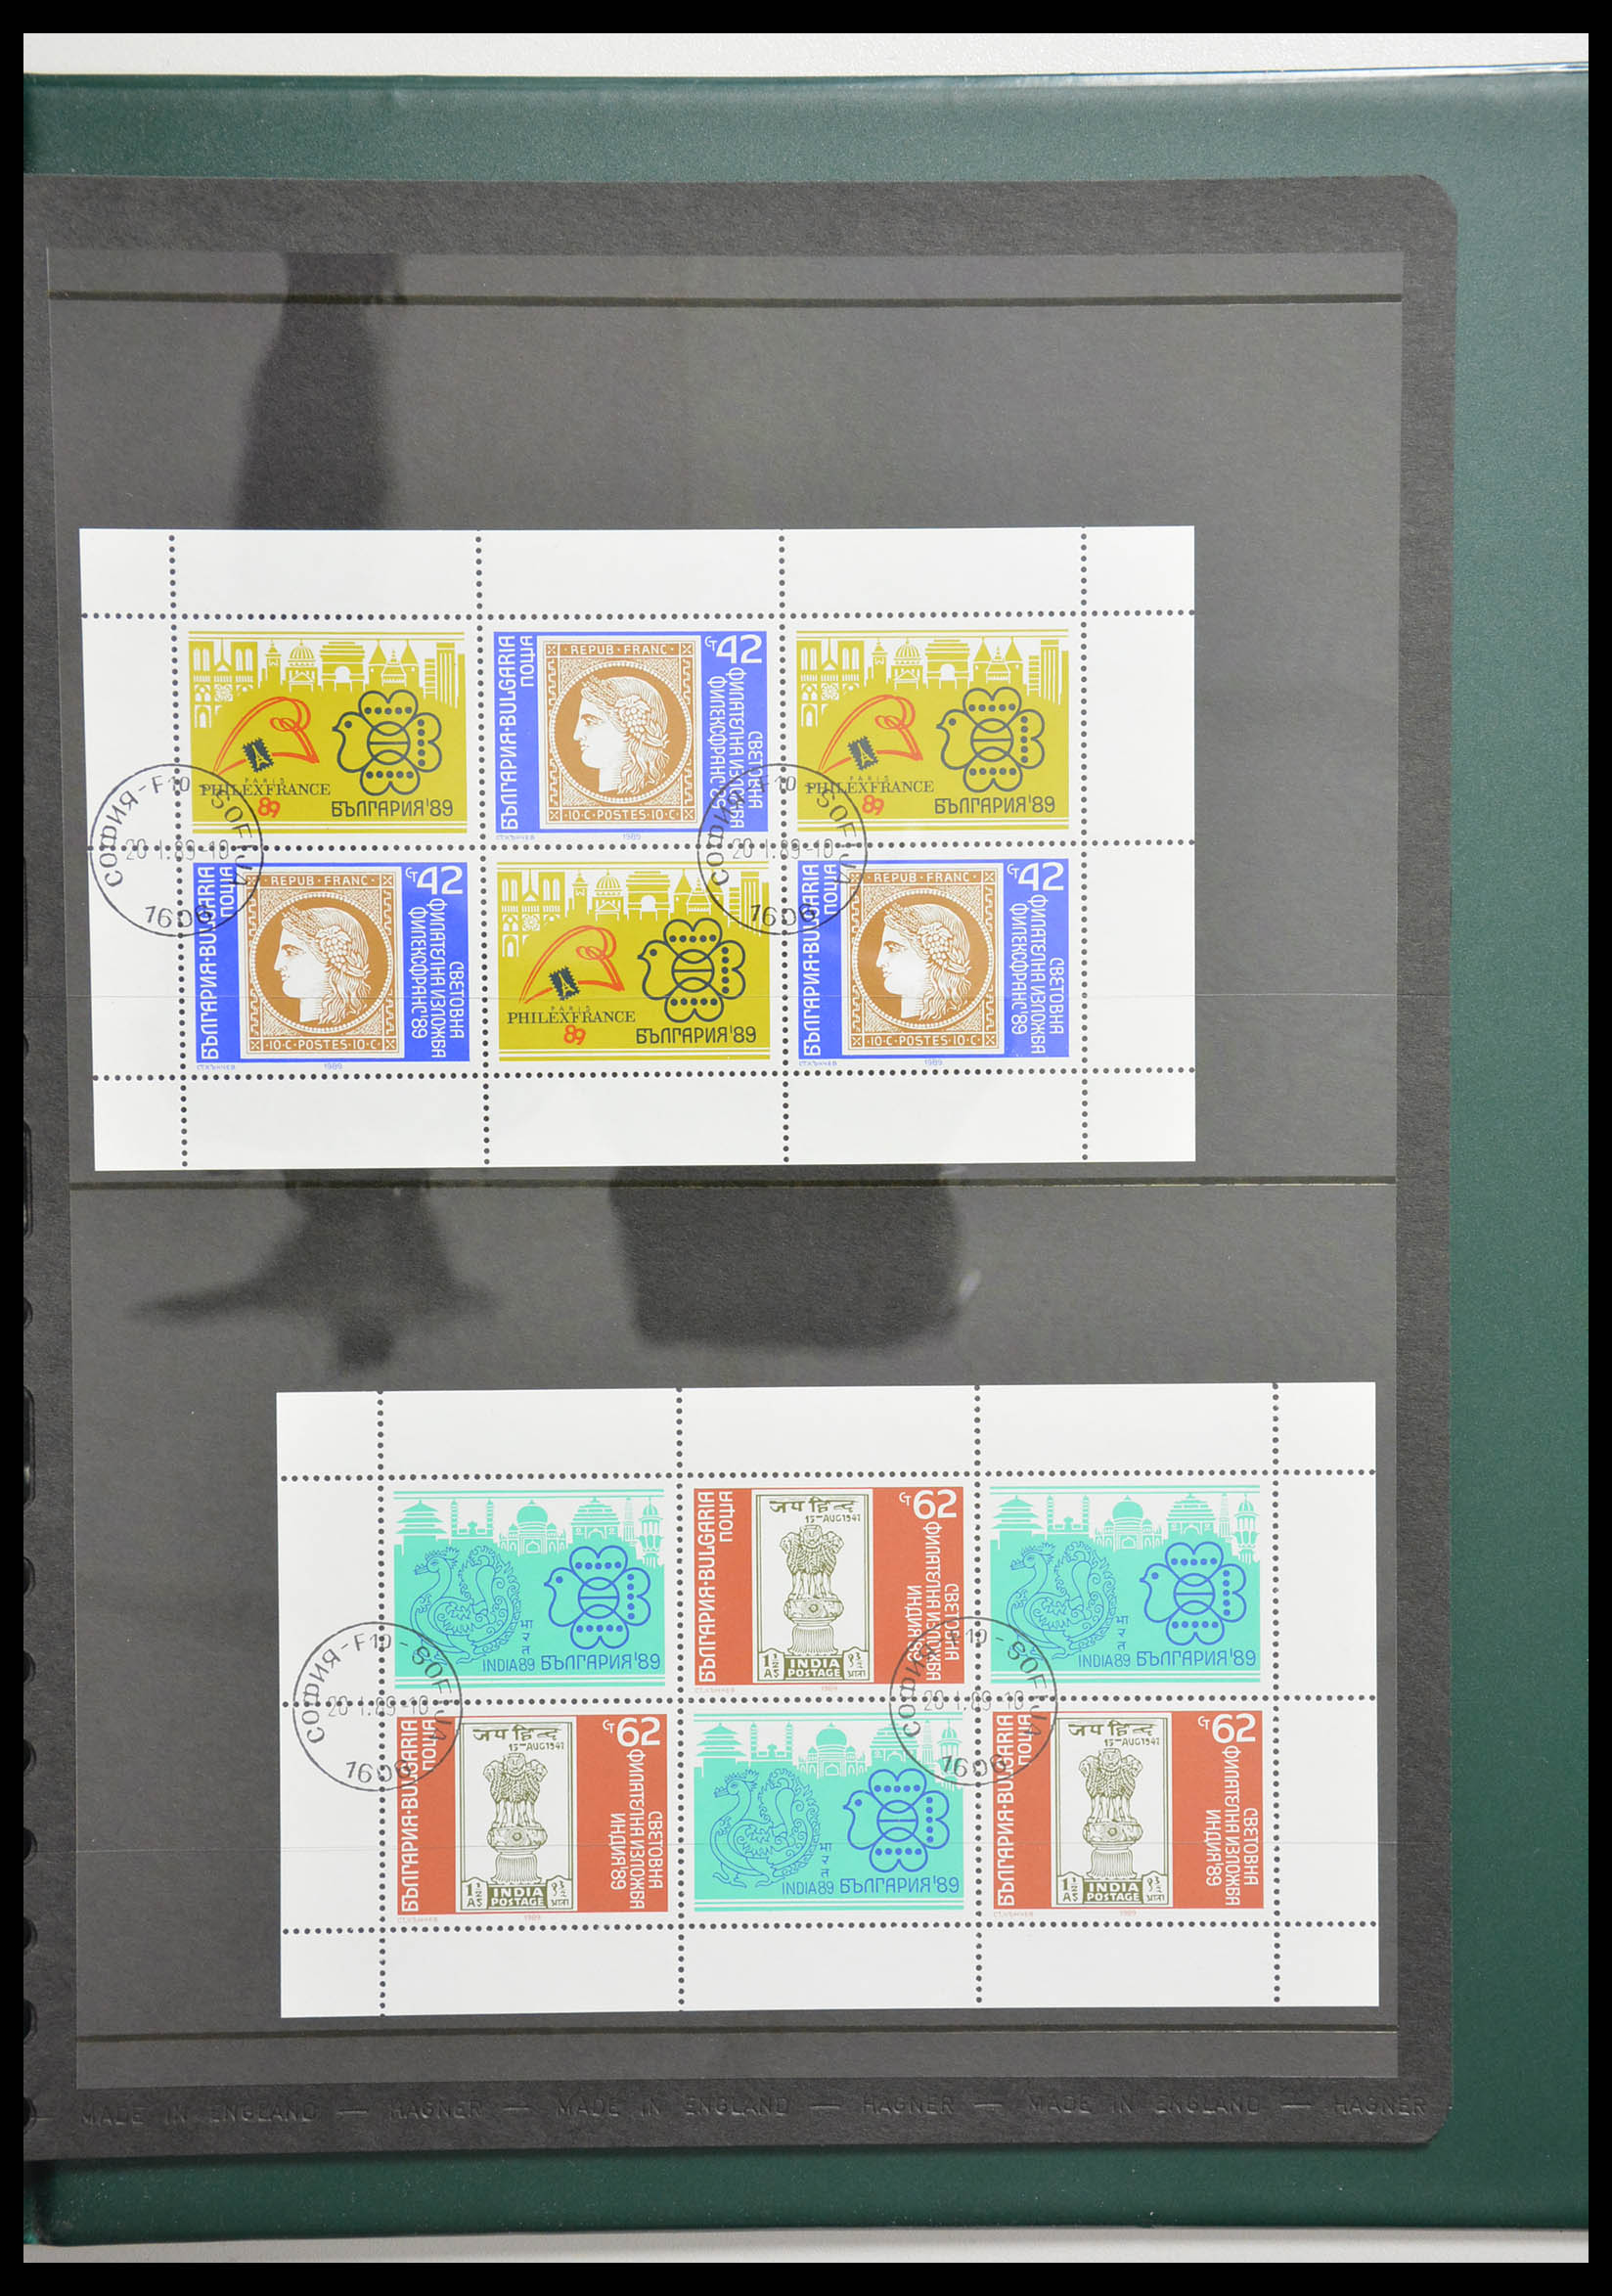 28337 091 - 28337 Postzegel op postzegel 1840-2001.